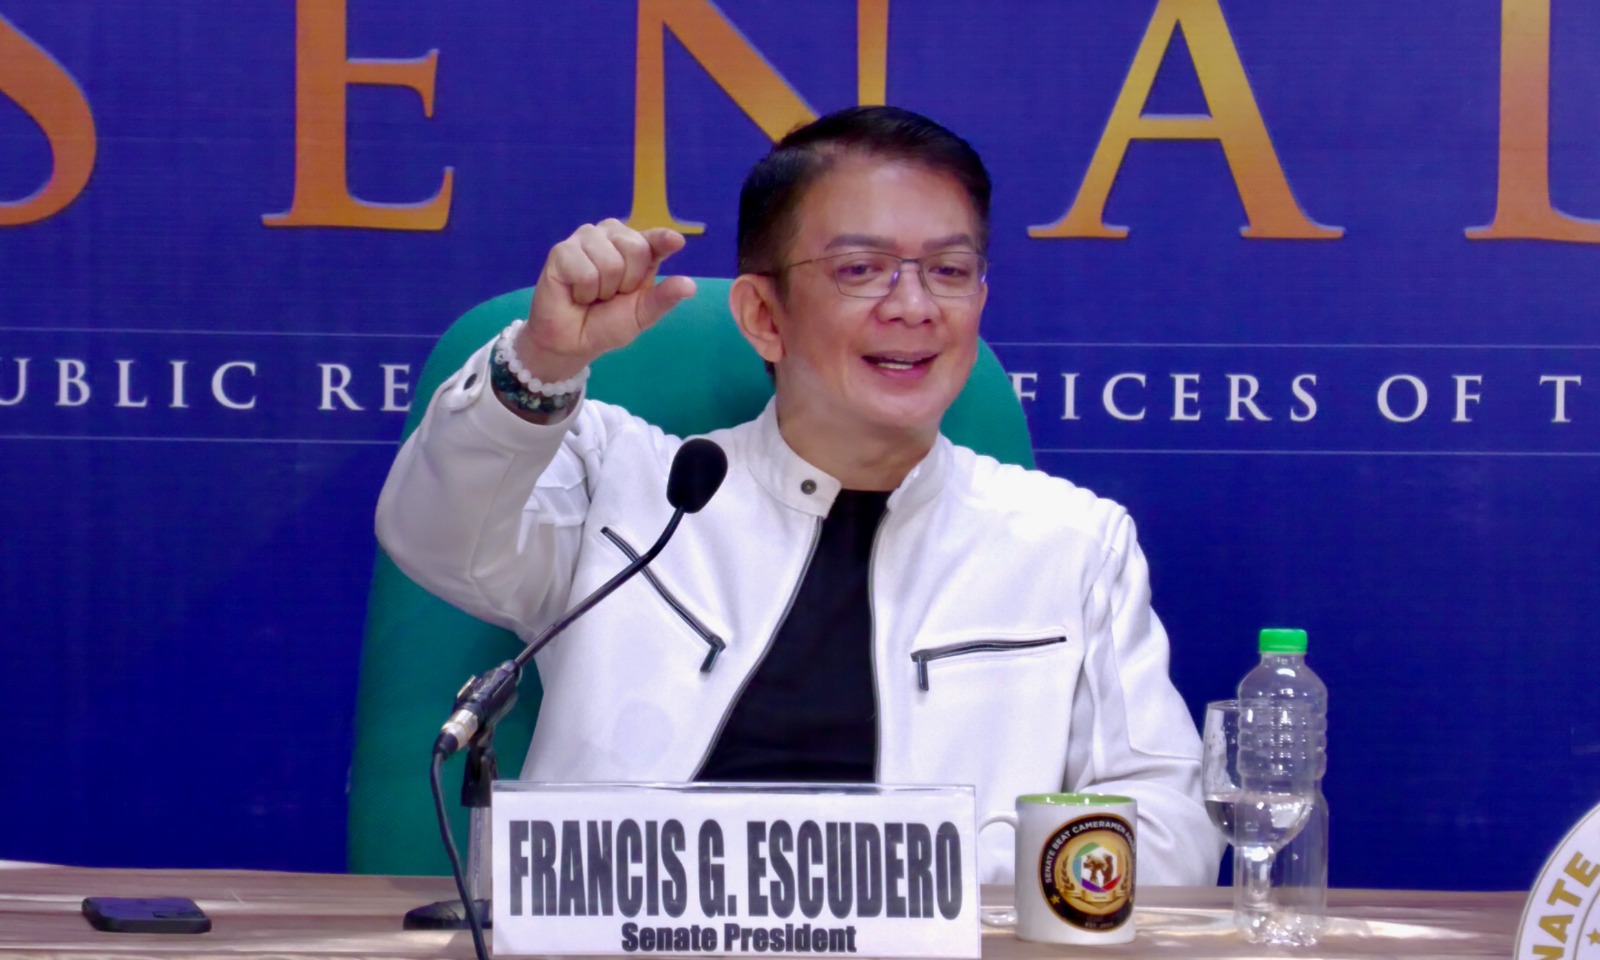 Escudero: Burden of proof lies upon those alleging Guo isn't Filipino